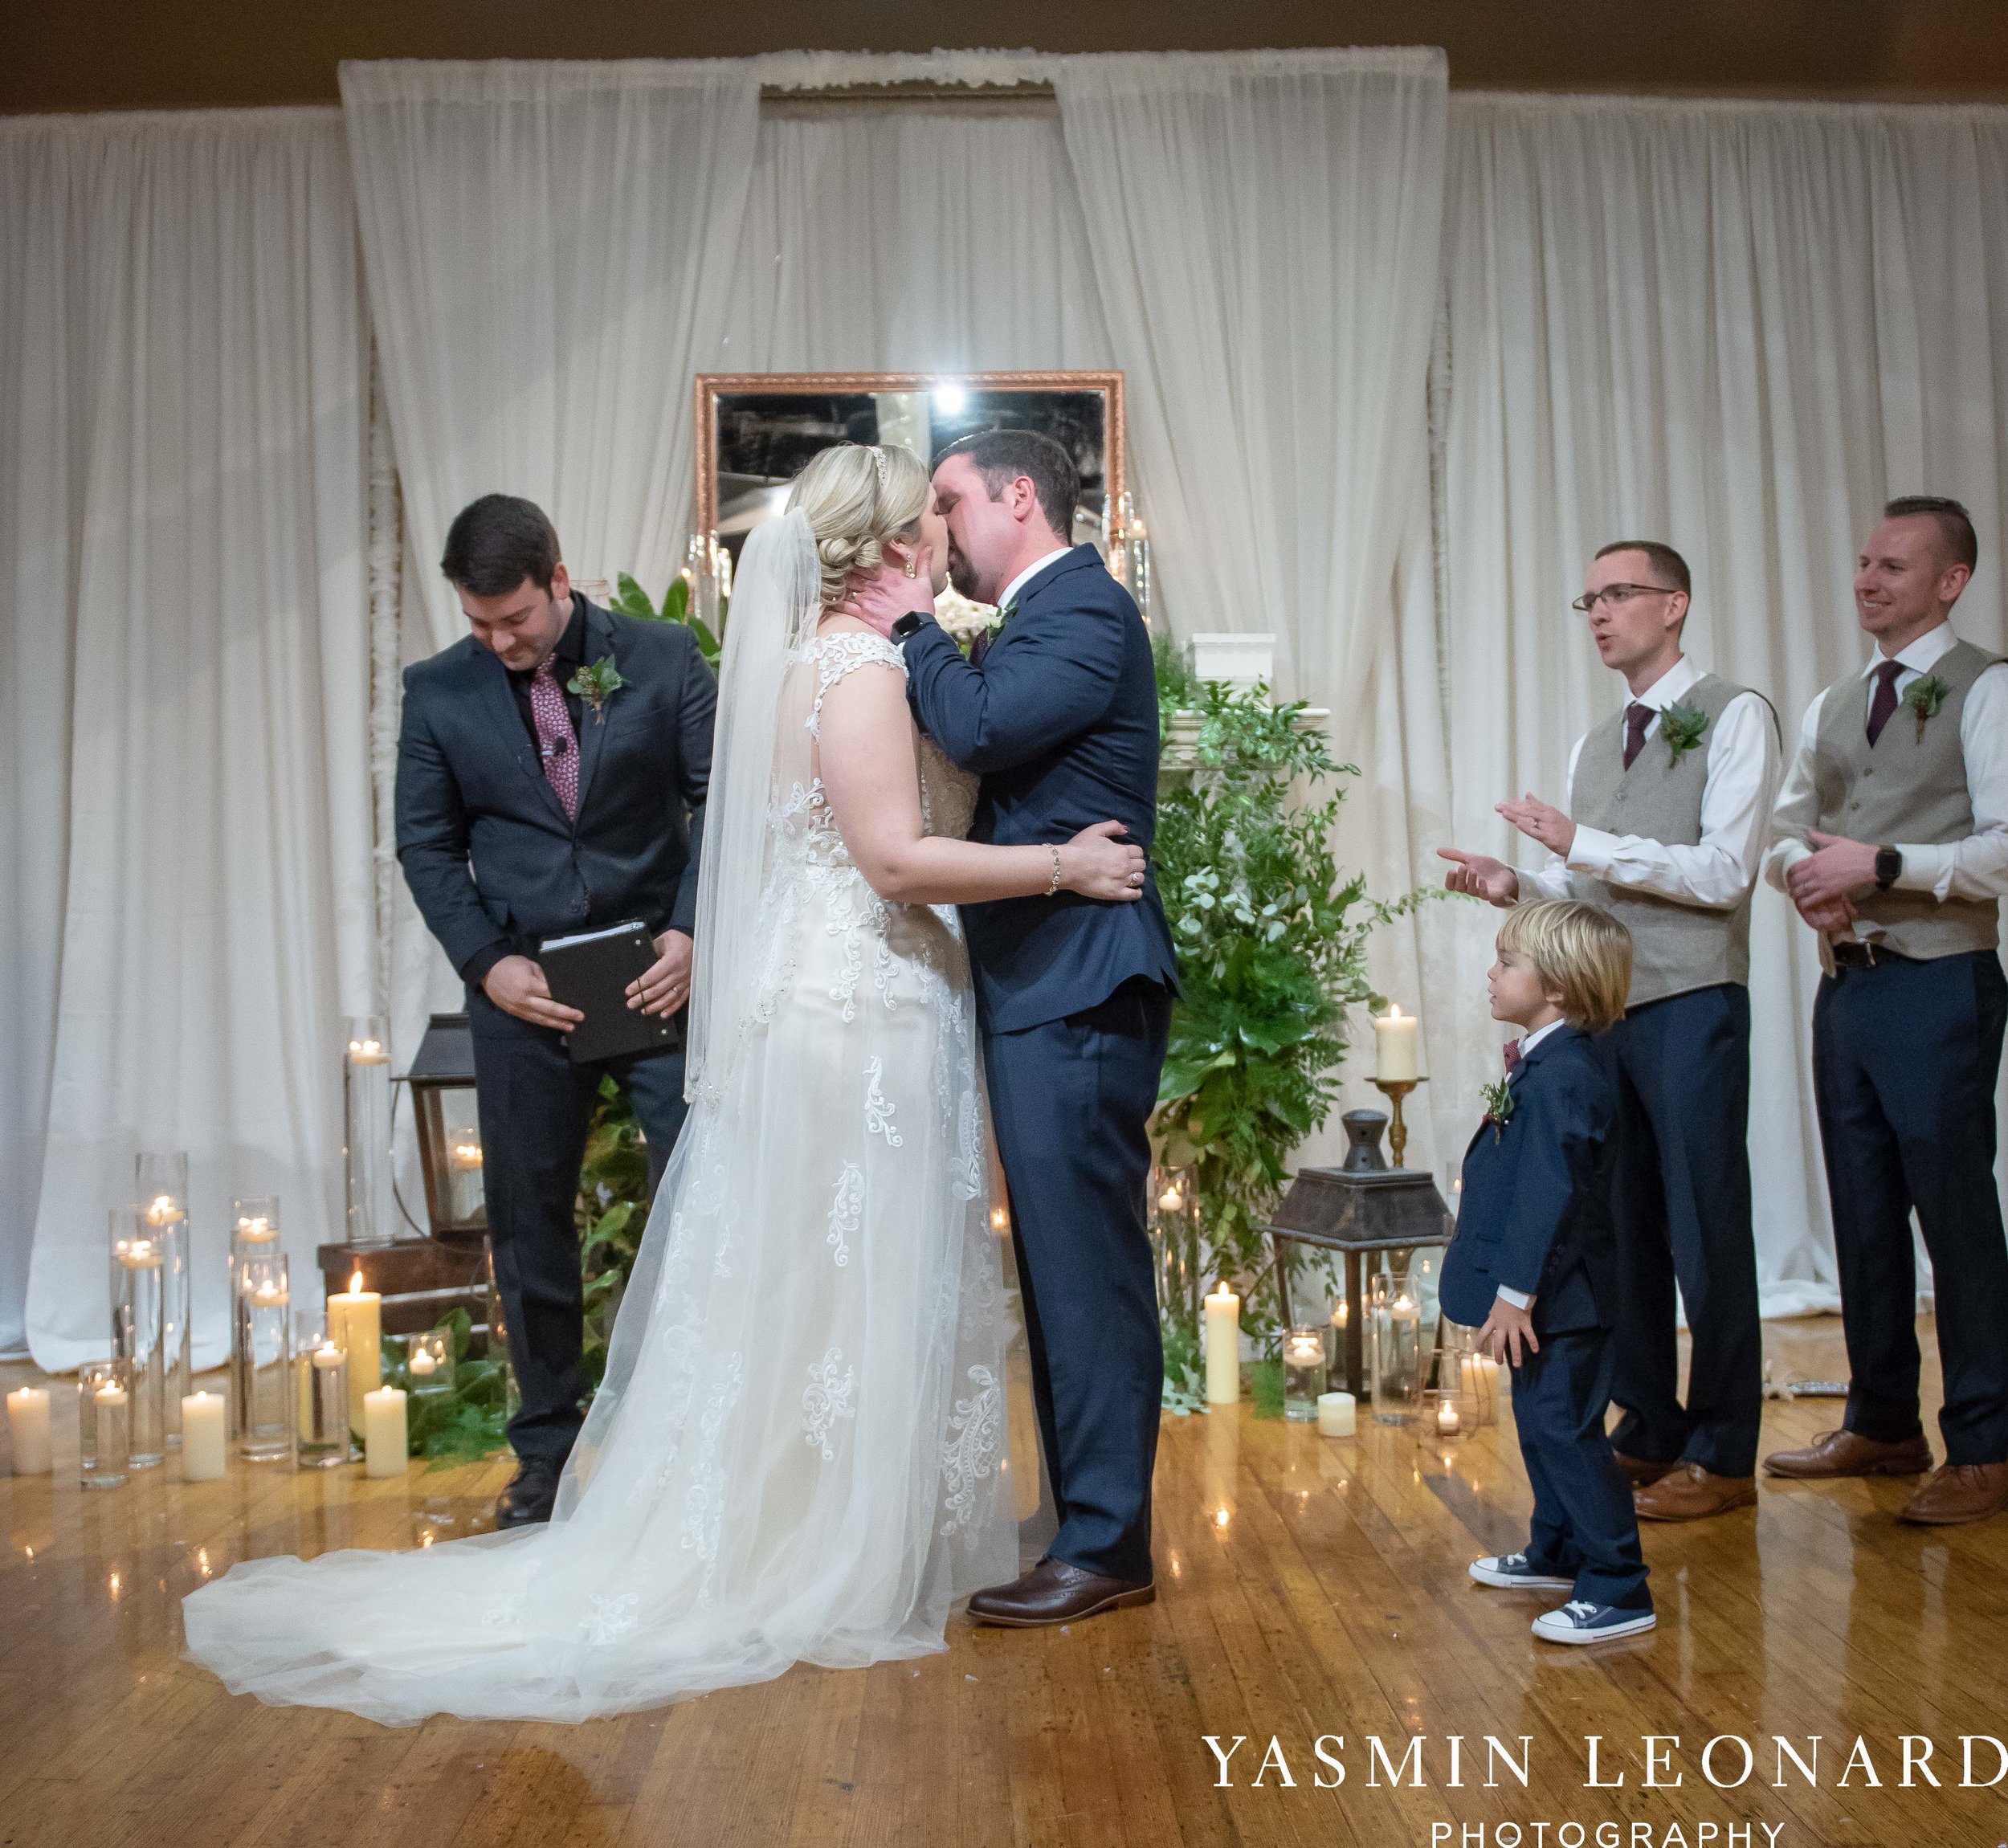 Rebekah and Matt - 105 Worth Event Centre - Yasmin Leonard Photography - Asheboro Wedding - NC Wedding - High Point Weddings - Triad Weddings - Winter Wedding-29.jpg